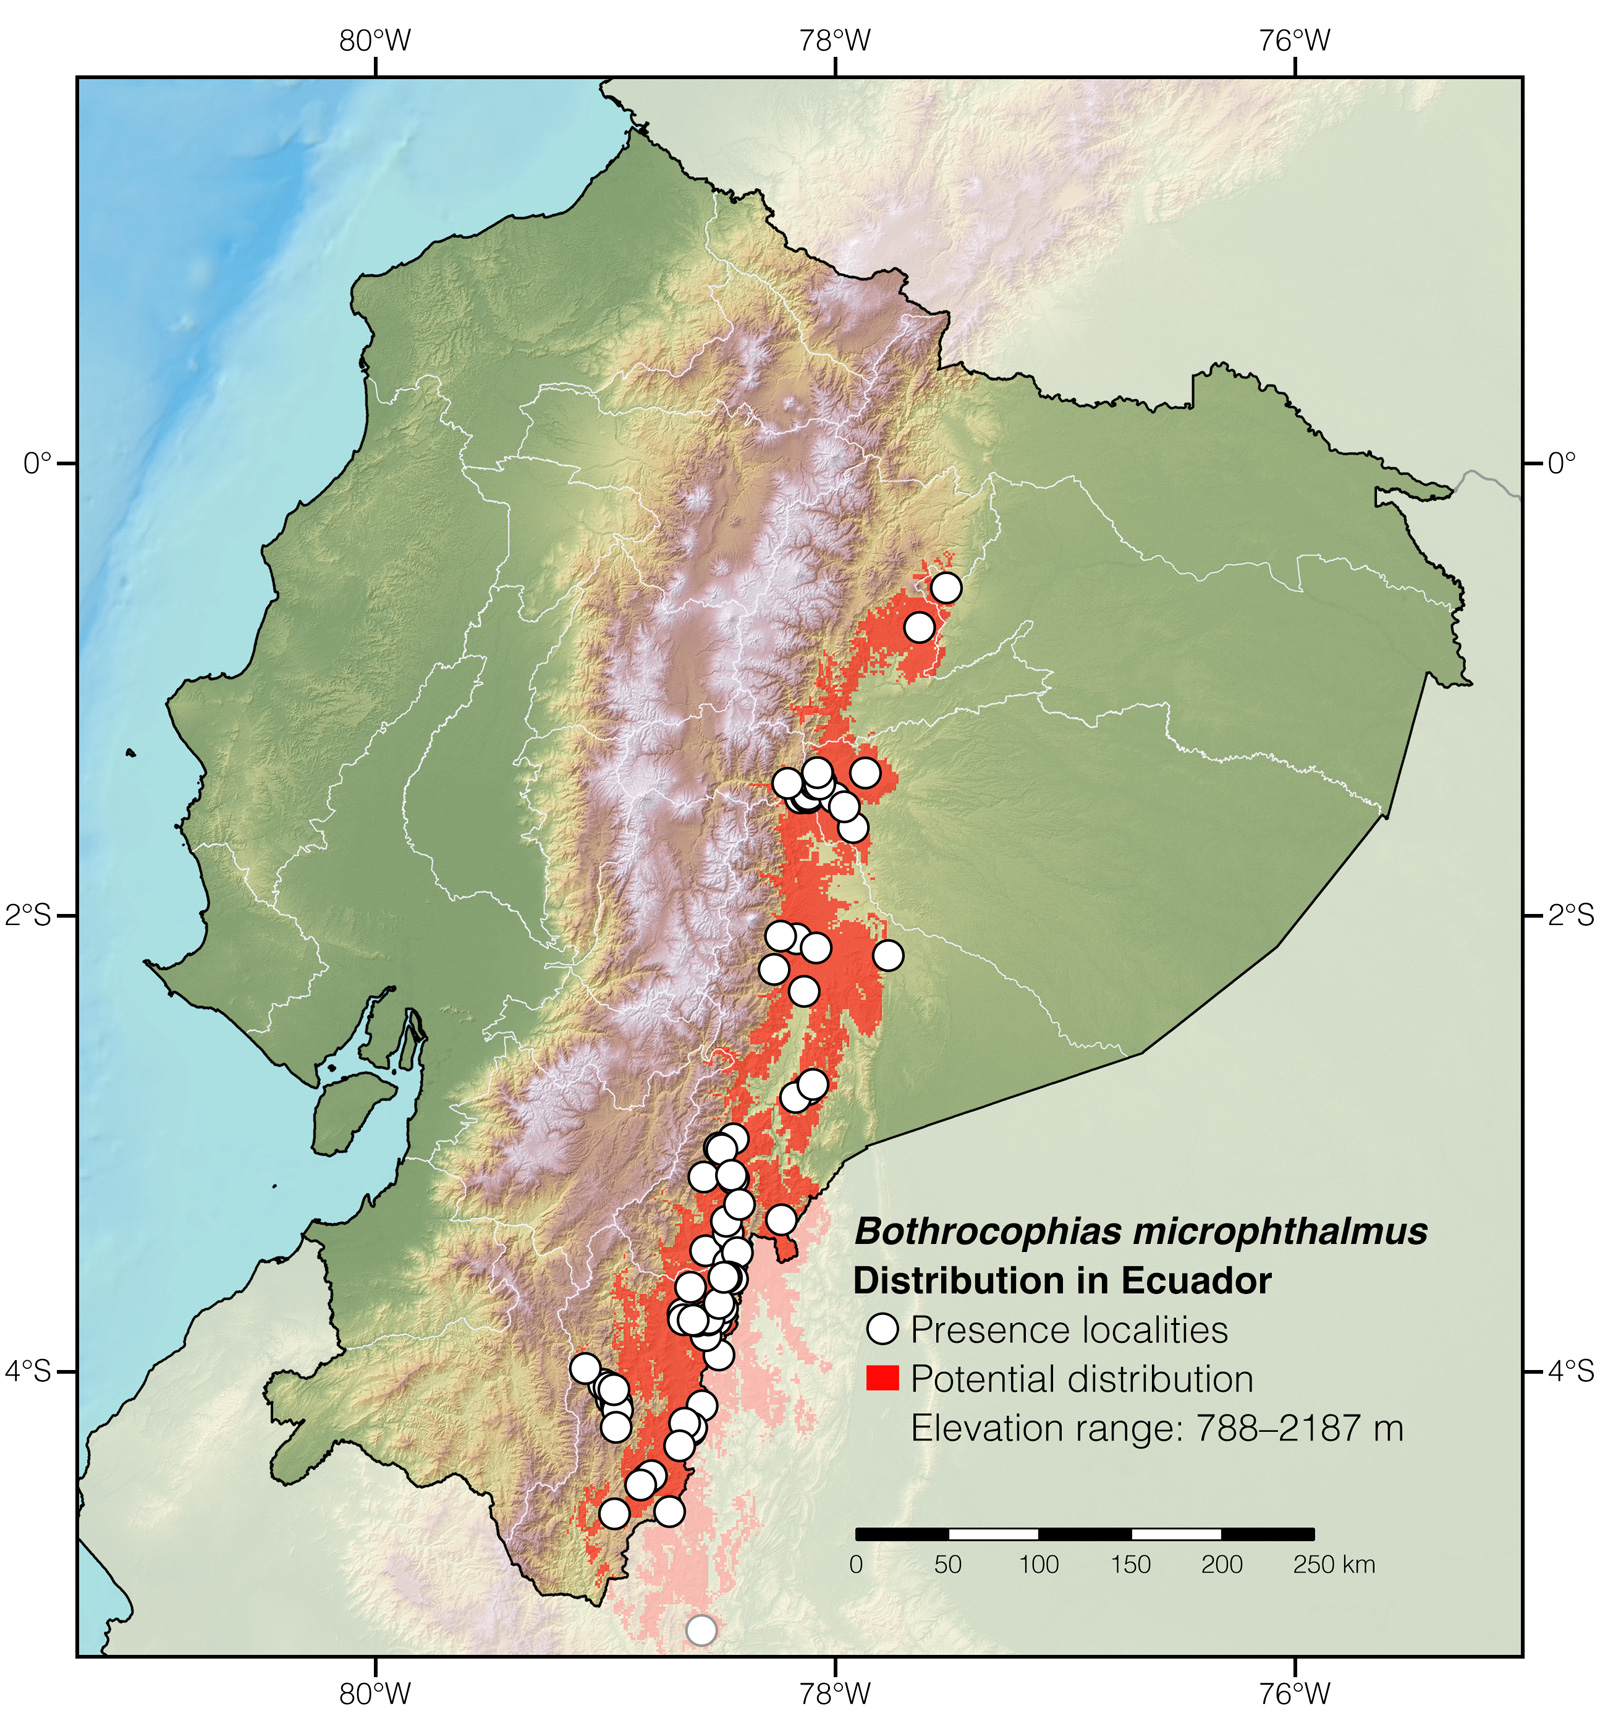 Distribution of Bothrocophias microphthalmus in Ecuador